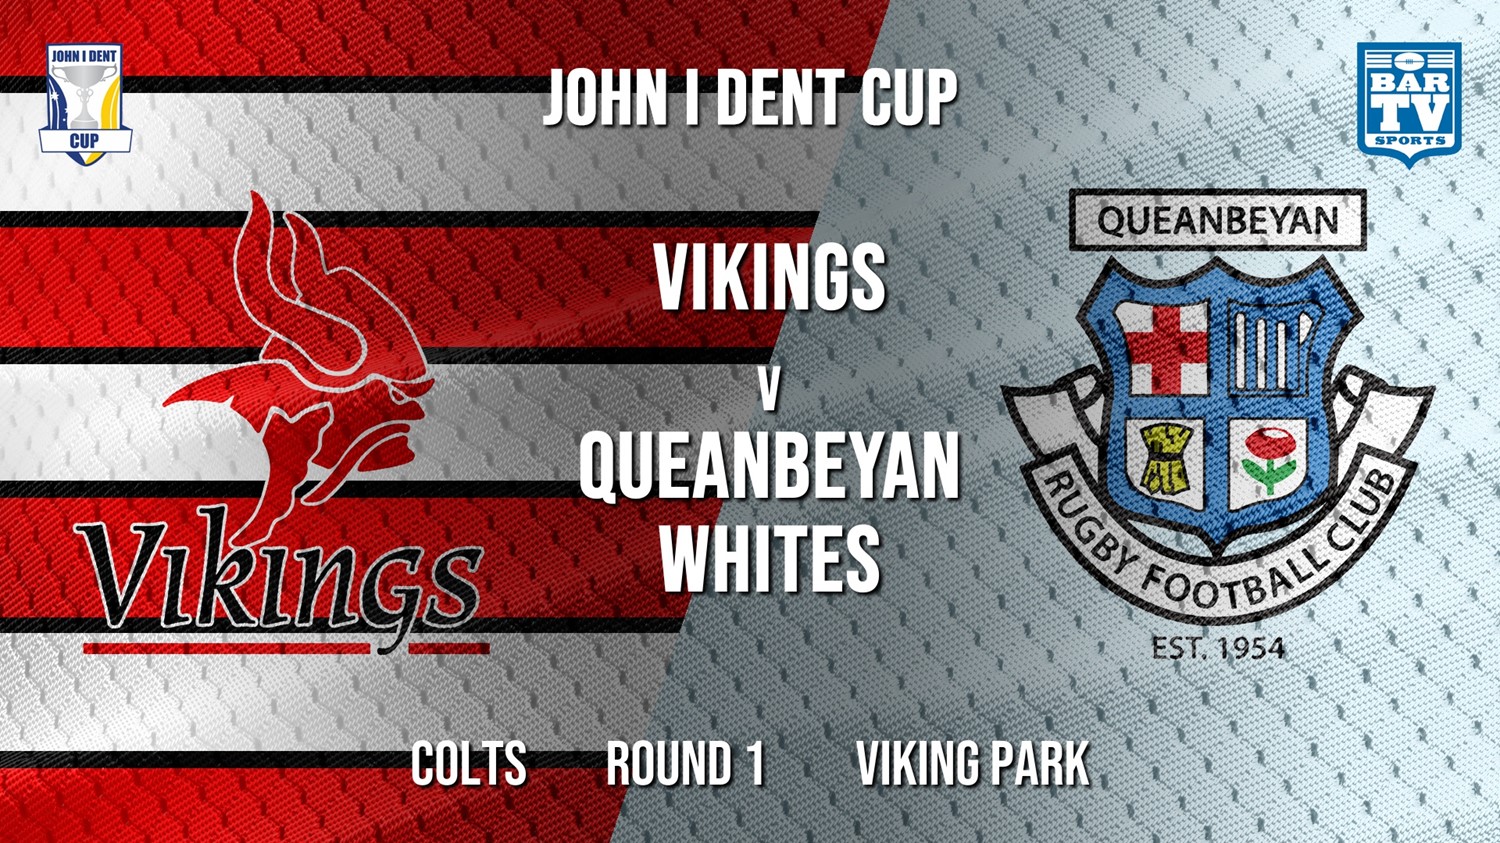 John I Dent Round 1  - Colts - Tuggeranong Vikings v Queanbeyan Whites Minigame Slate Image